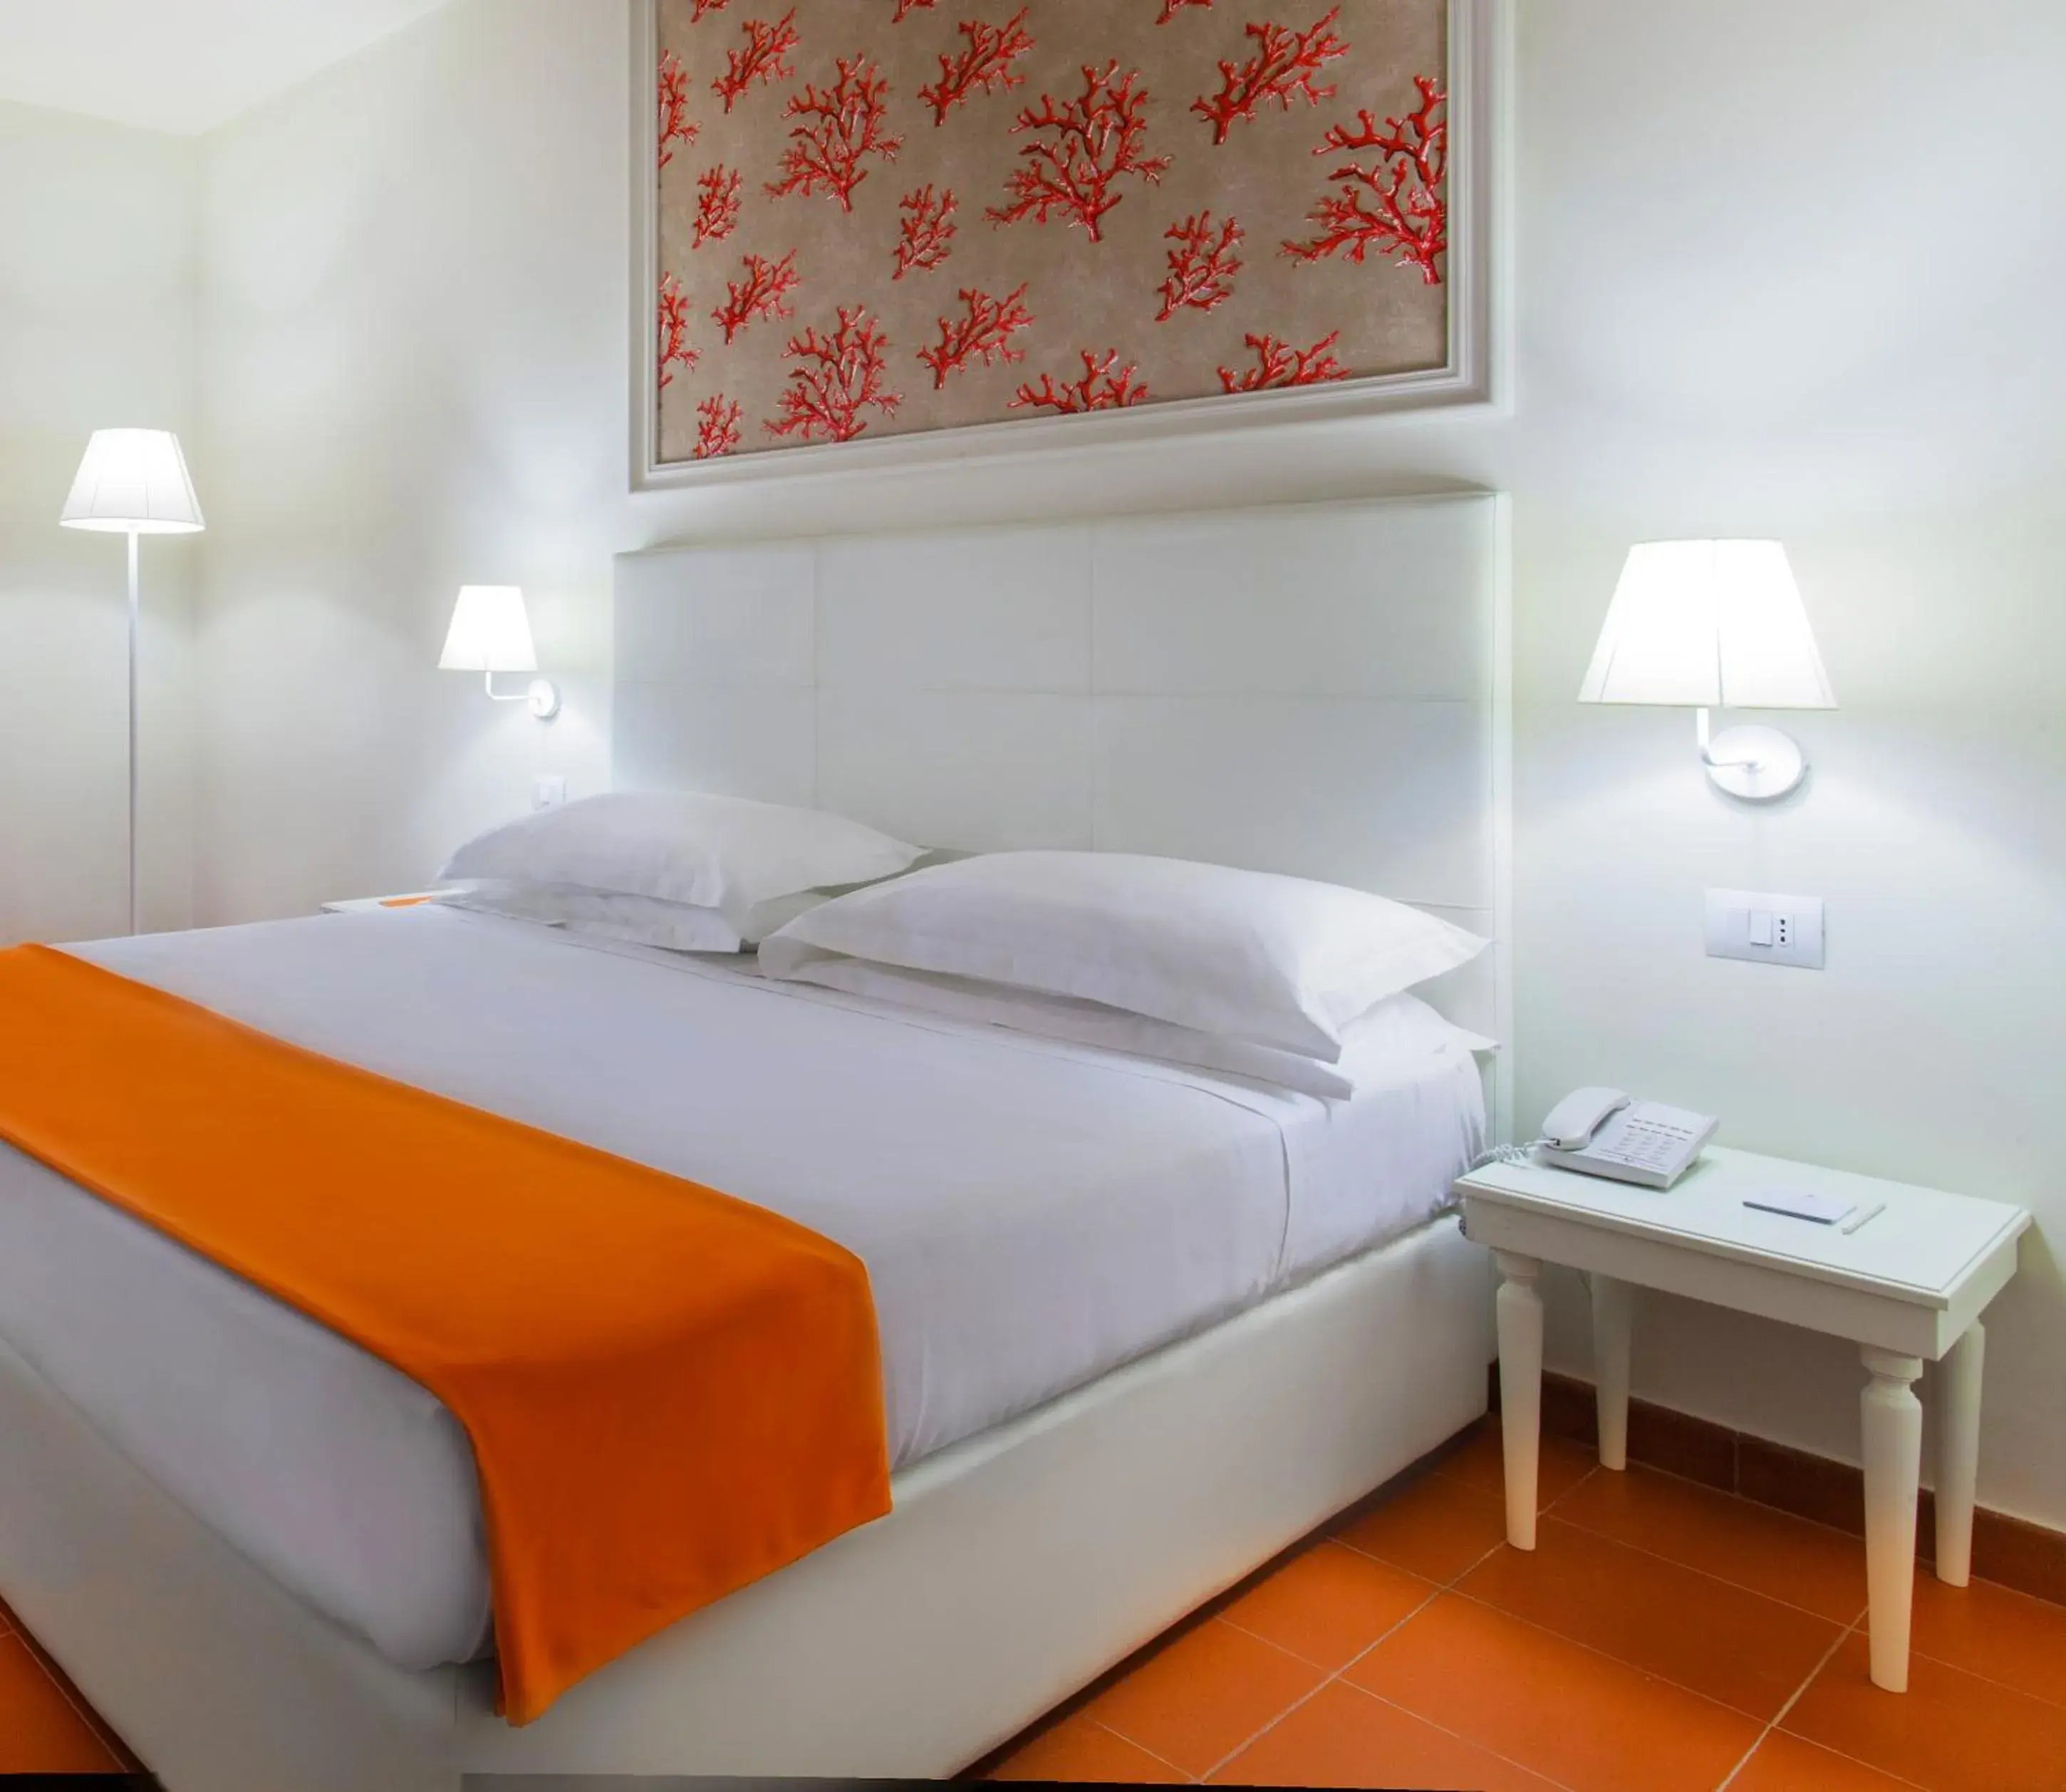 Bed, Room Photo in Hotel Caparena